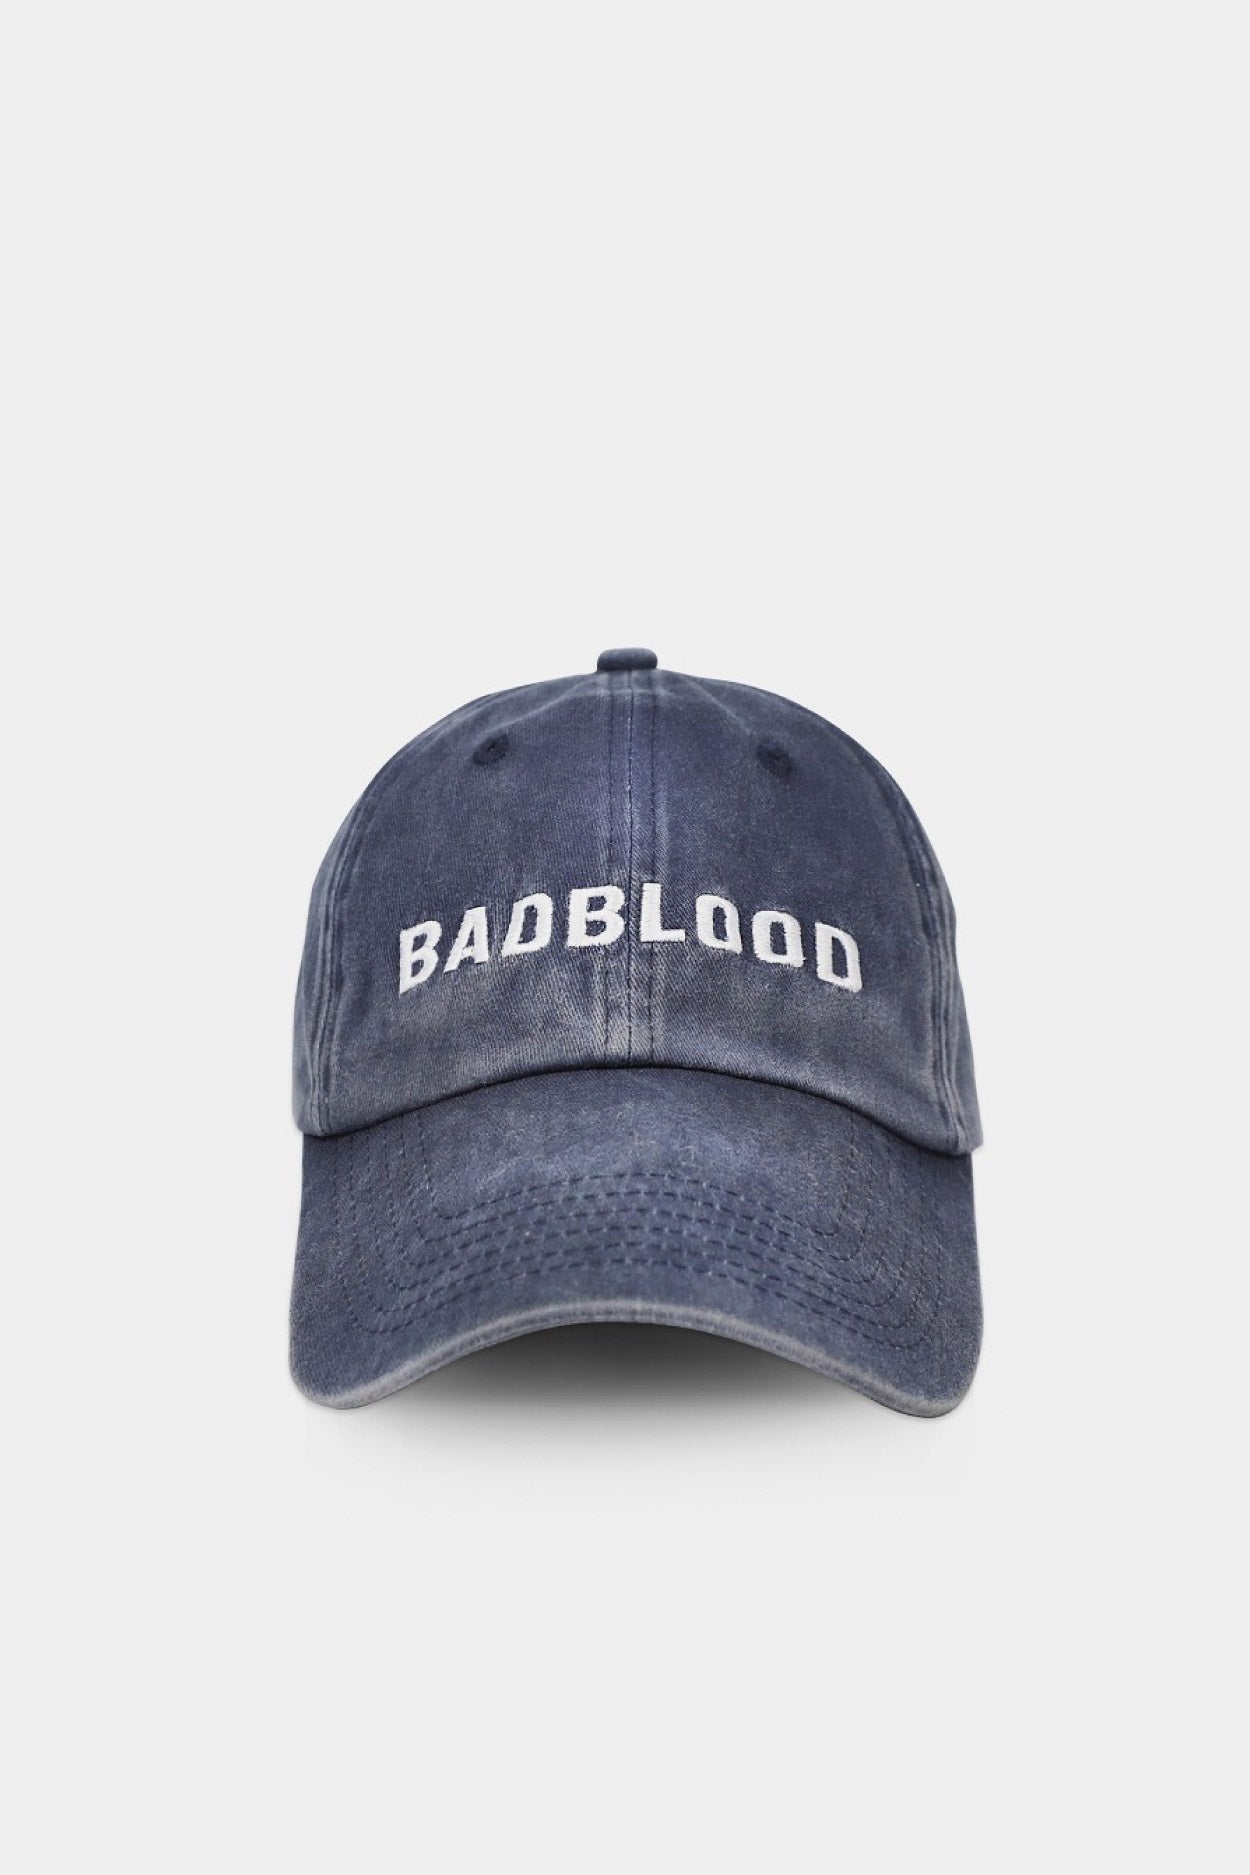 Badblood Vintage Logo Ball Cap Navy